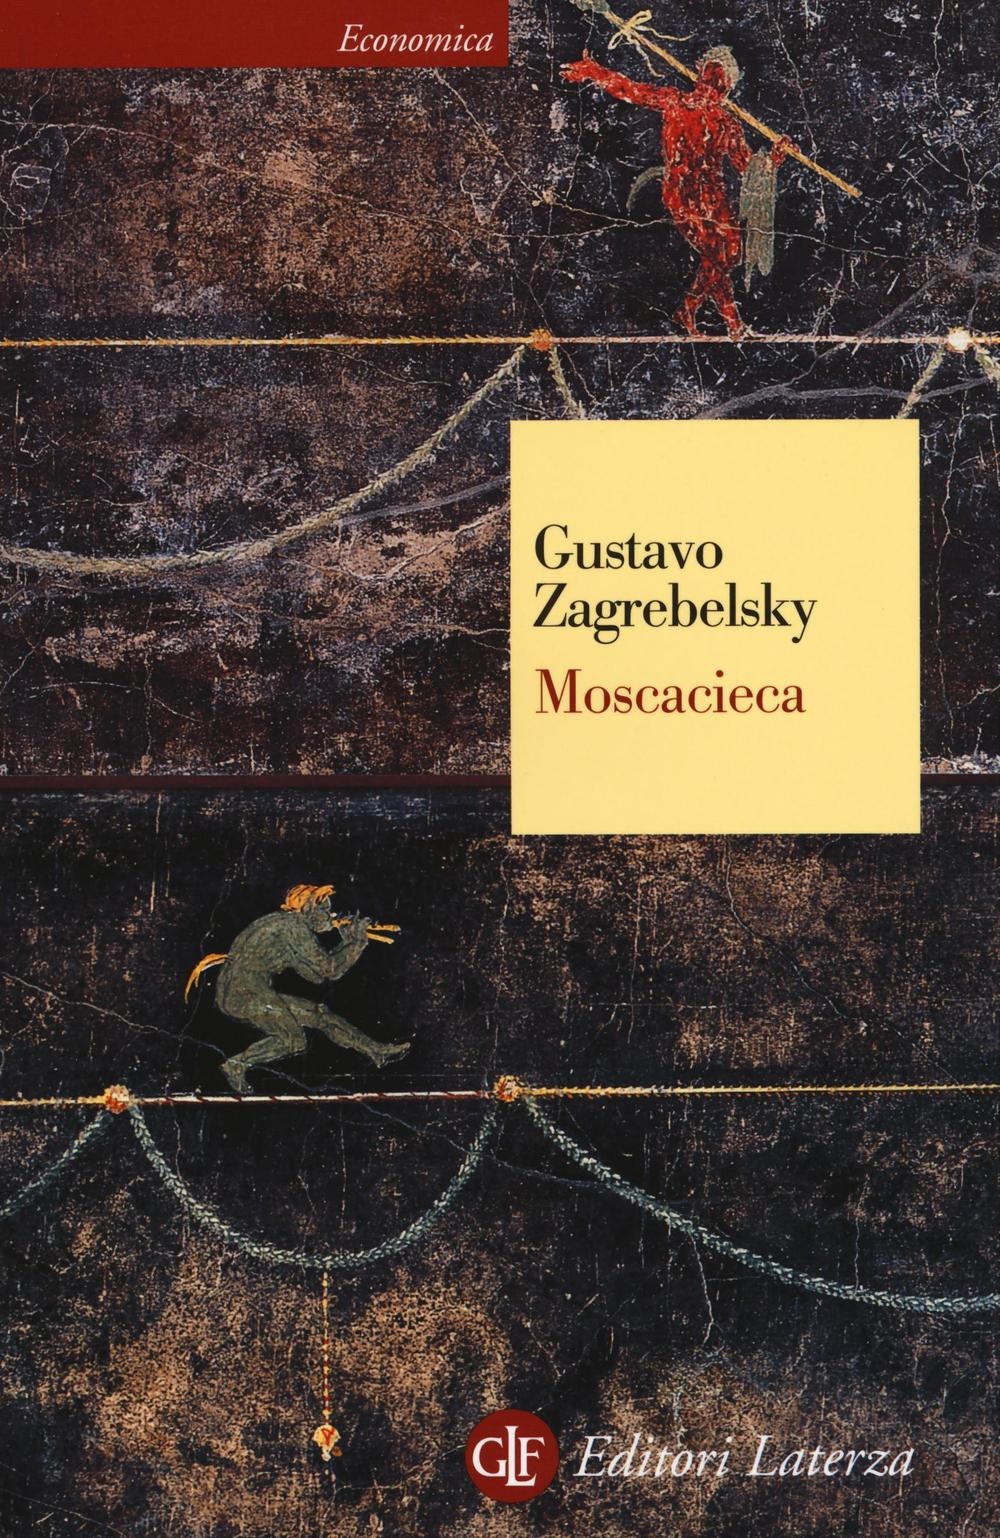 Gustavo Zagrebelsky: Moscacieca